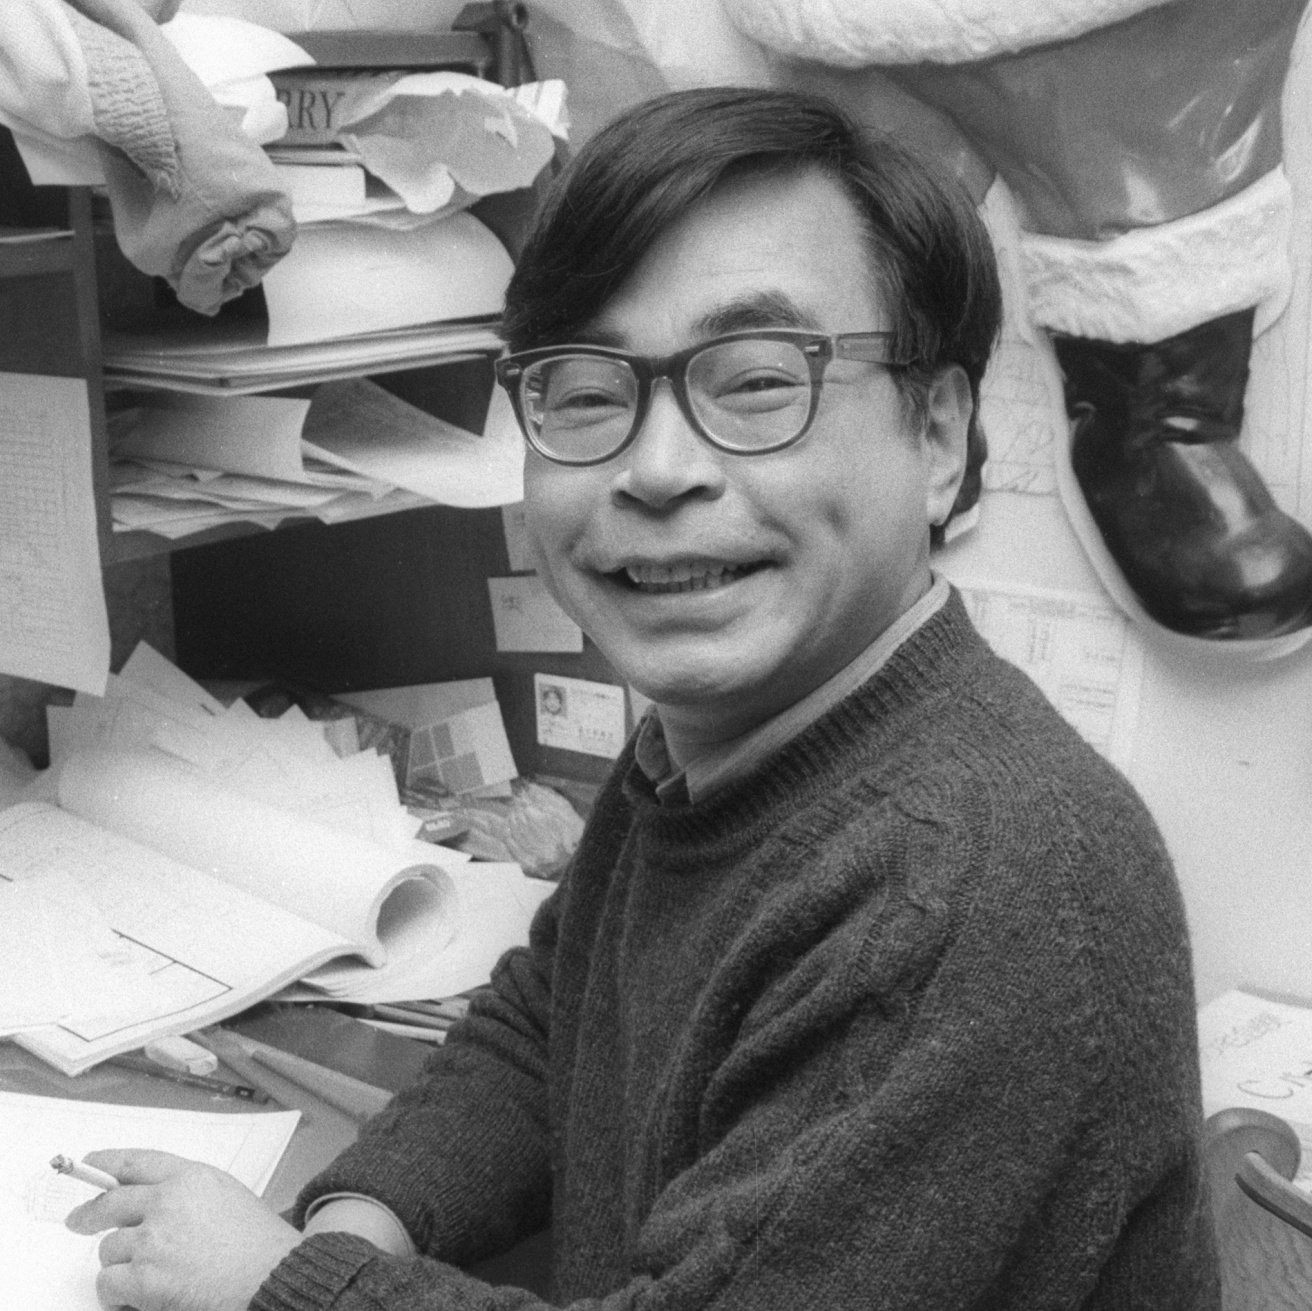 Happy birthday to the big man himself, Hayao Miyazaki! From us, he gets full marks as director. 